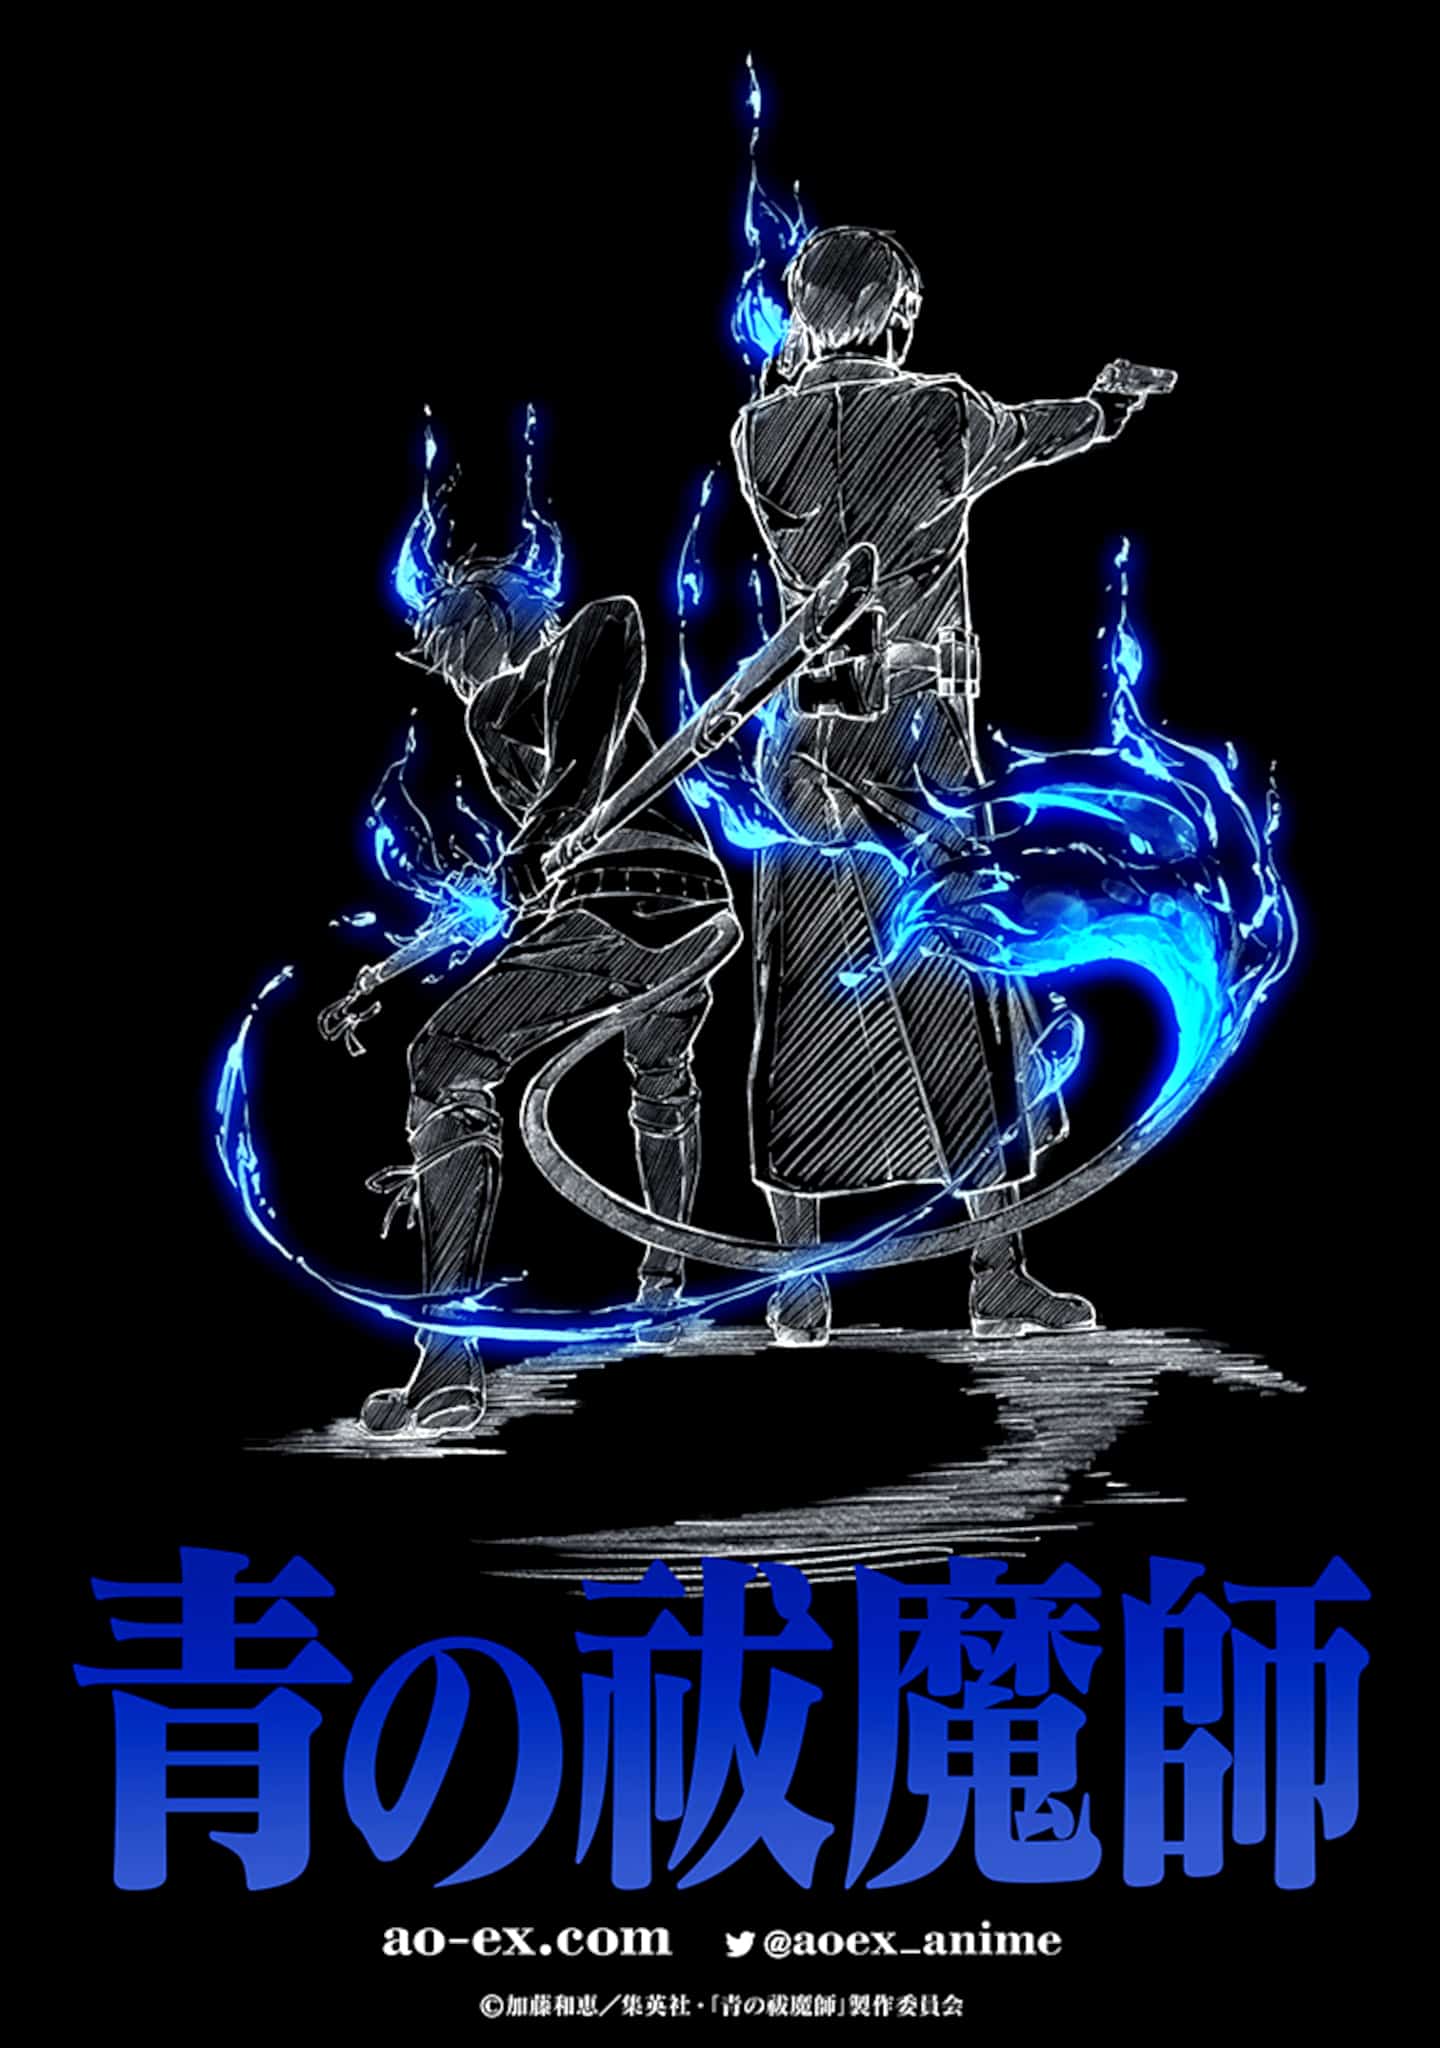 Premier visuel pour lanime Blue Exorcist Saison 3 (Ao no Exorcist : Shimane Illuminati Saga)